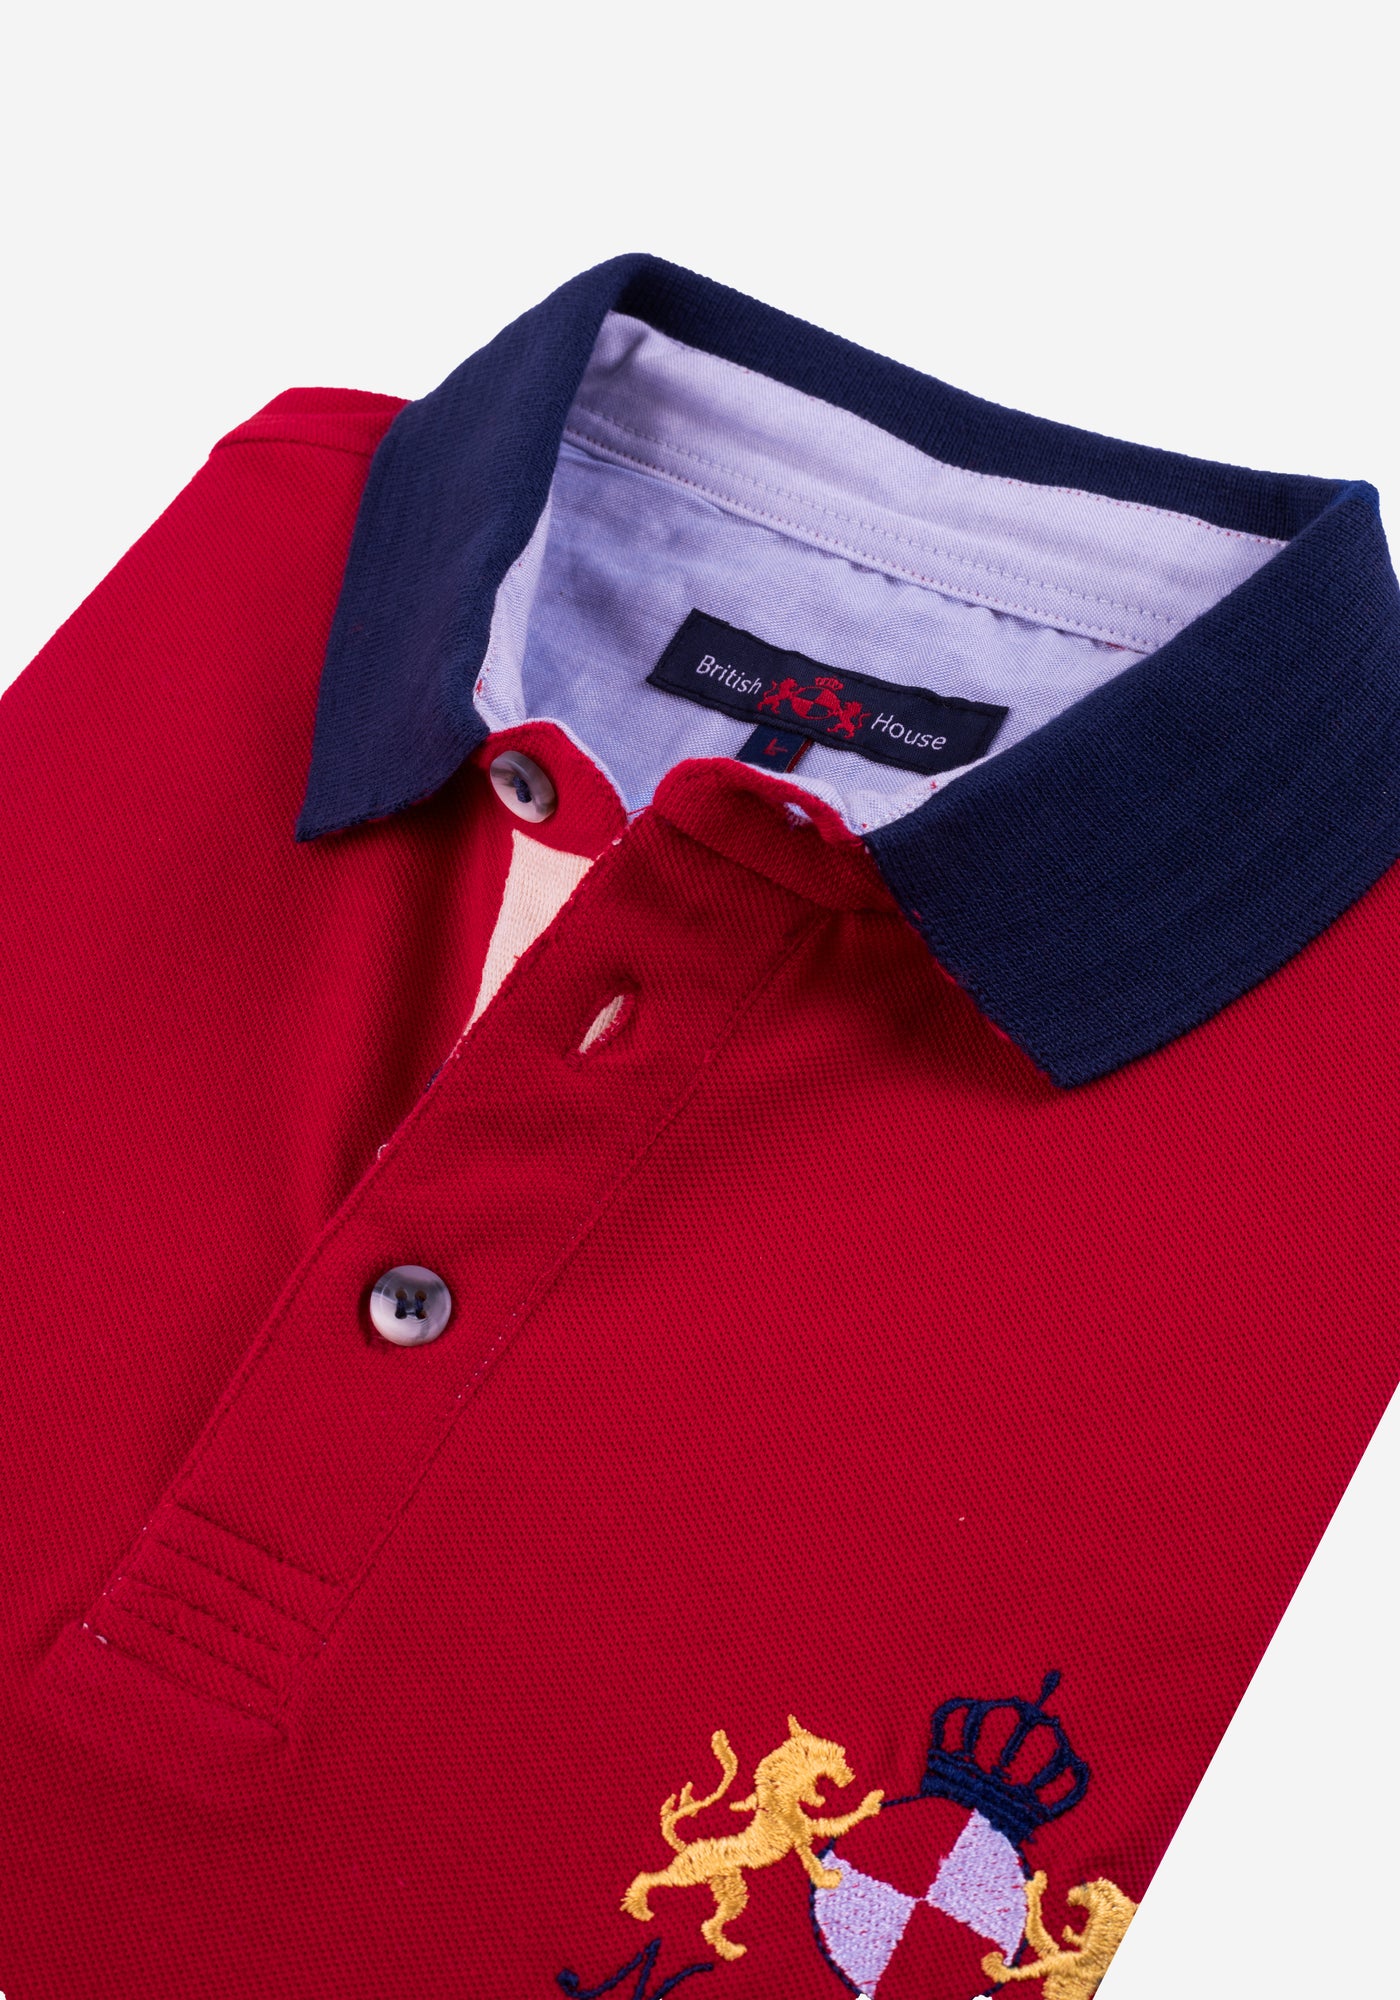 Vivid Red Cotton Polo Shirt